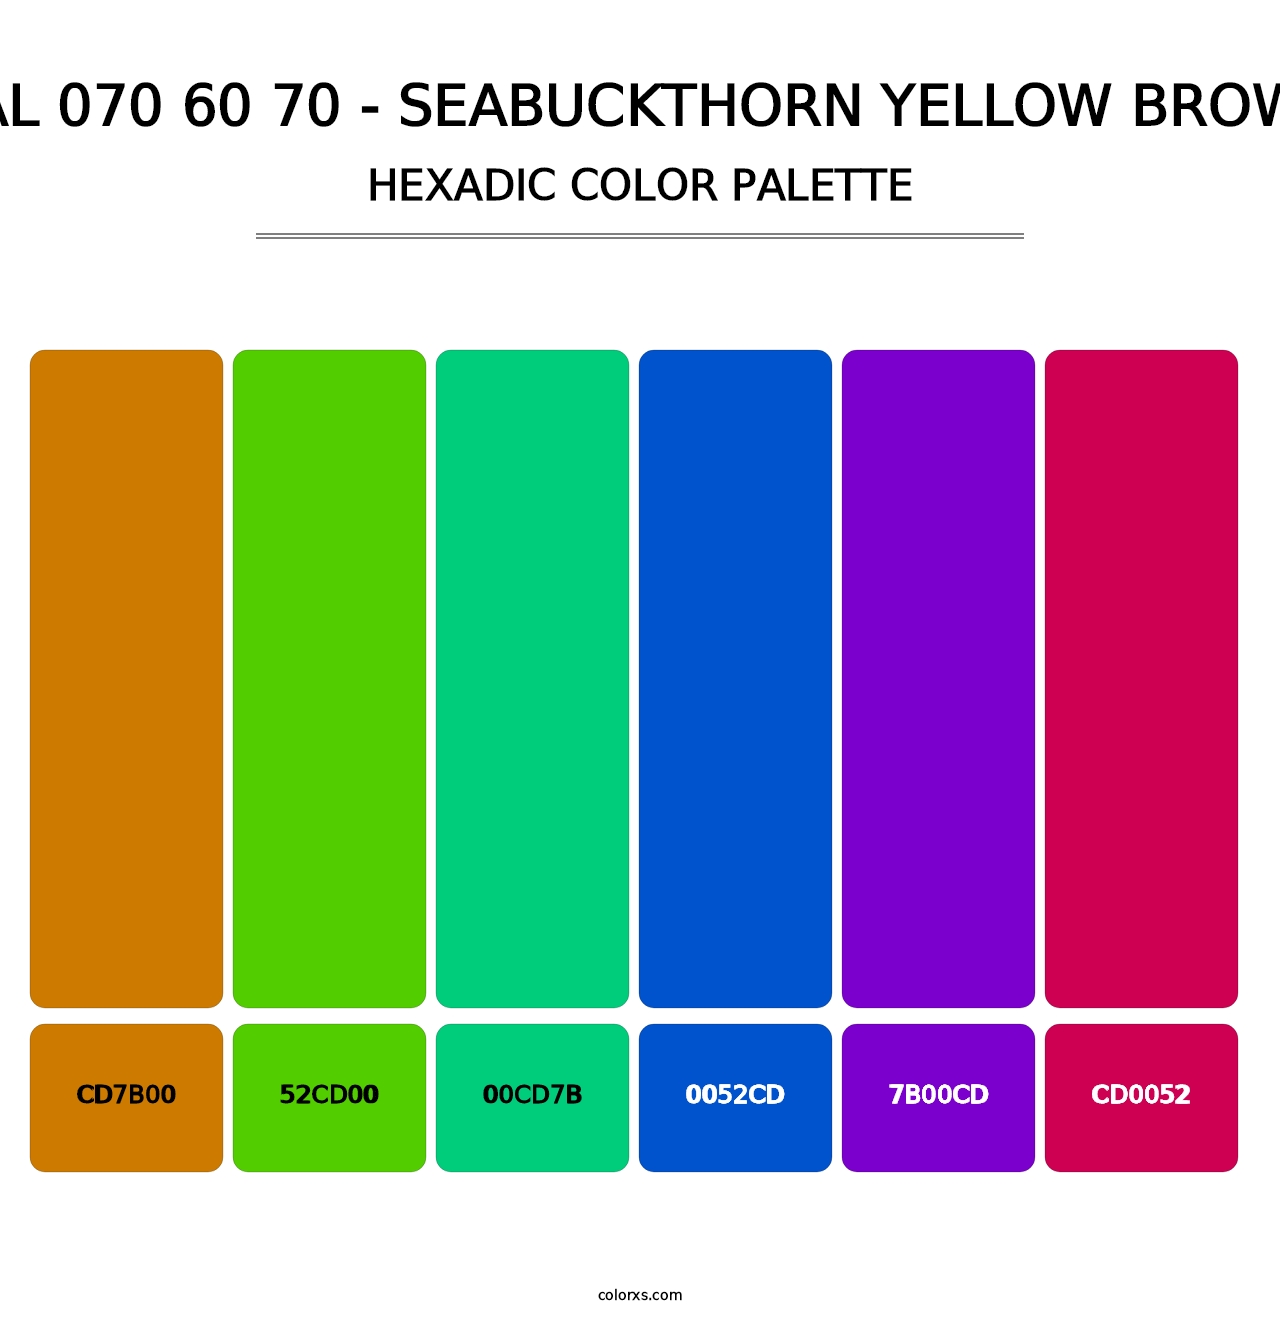 RAL 070 60 70 - Seabuckthorn Yellow Brown - Hexadic Color Palette